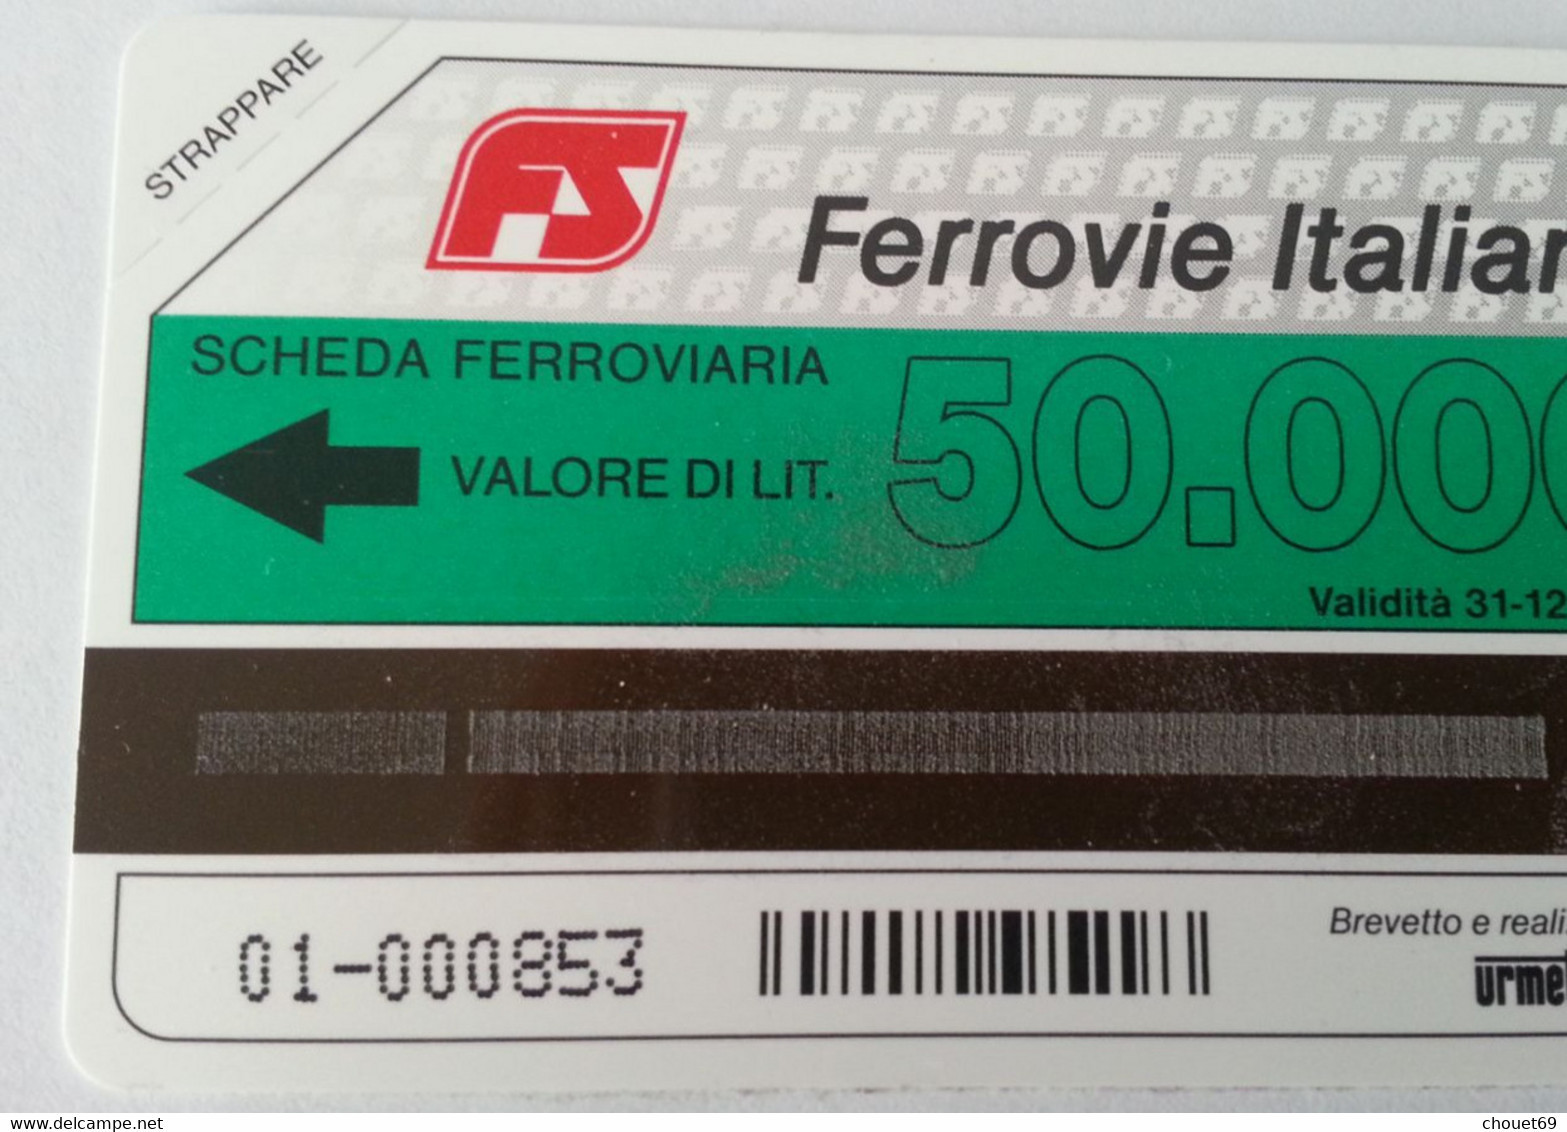 FS Ferrovie Italiane Scheda Ferroviaria In Train 50000 Urmet NEUVE MINT Ferrovie (D0415 - Sonderzwecke